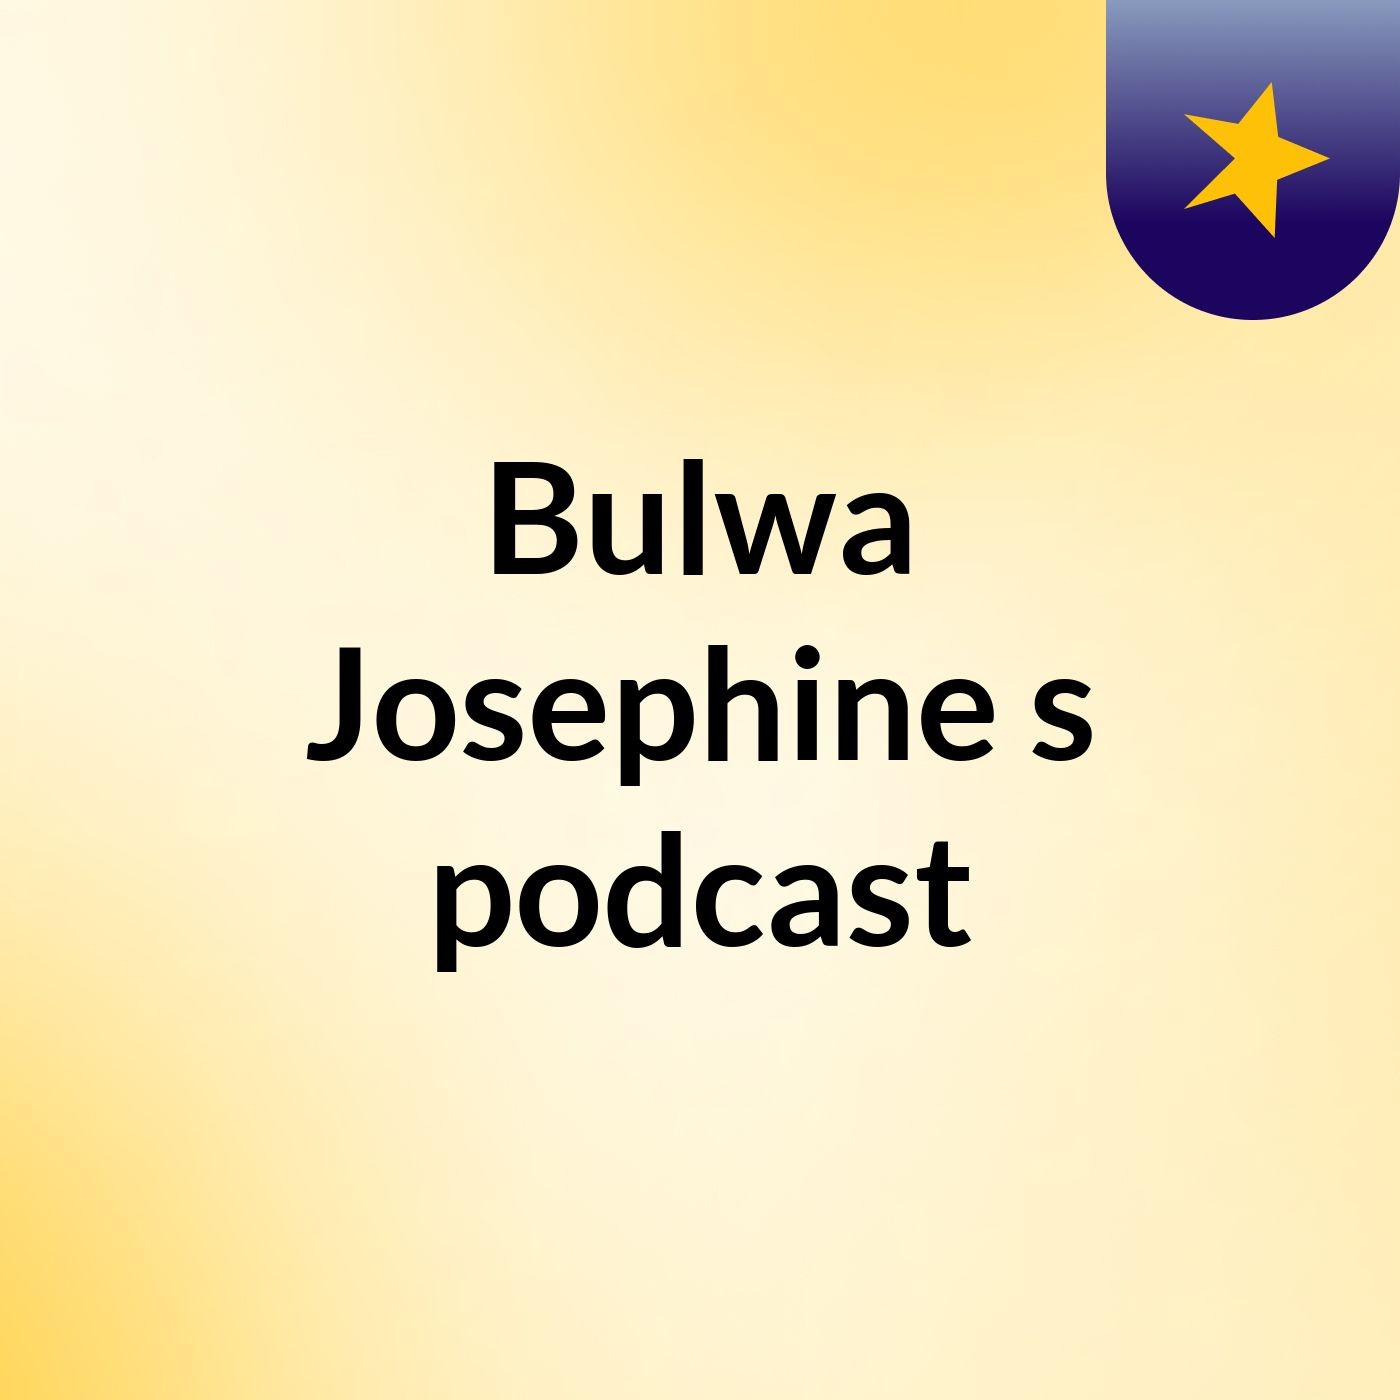 Bulwa Josephine's podcast